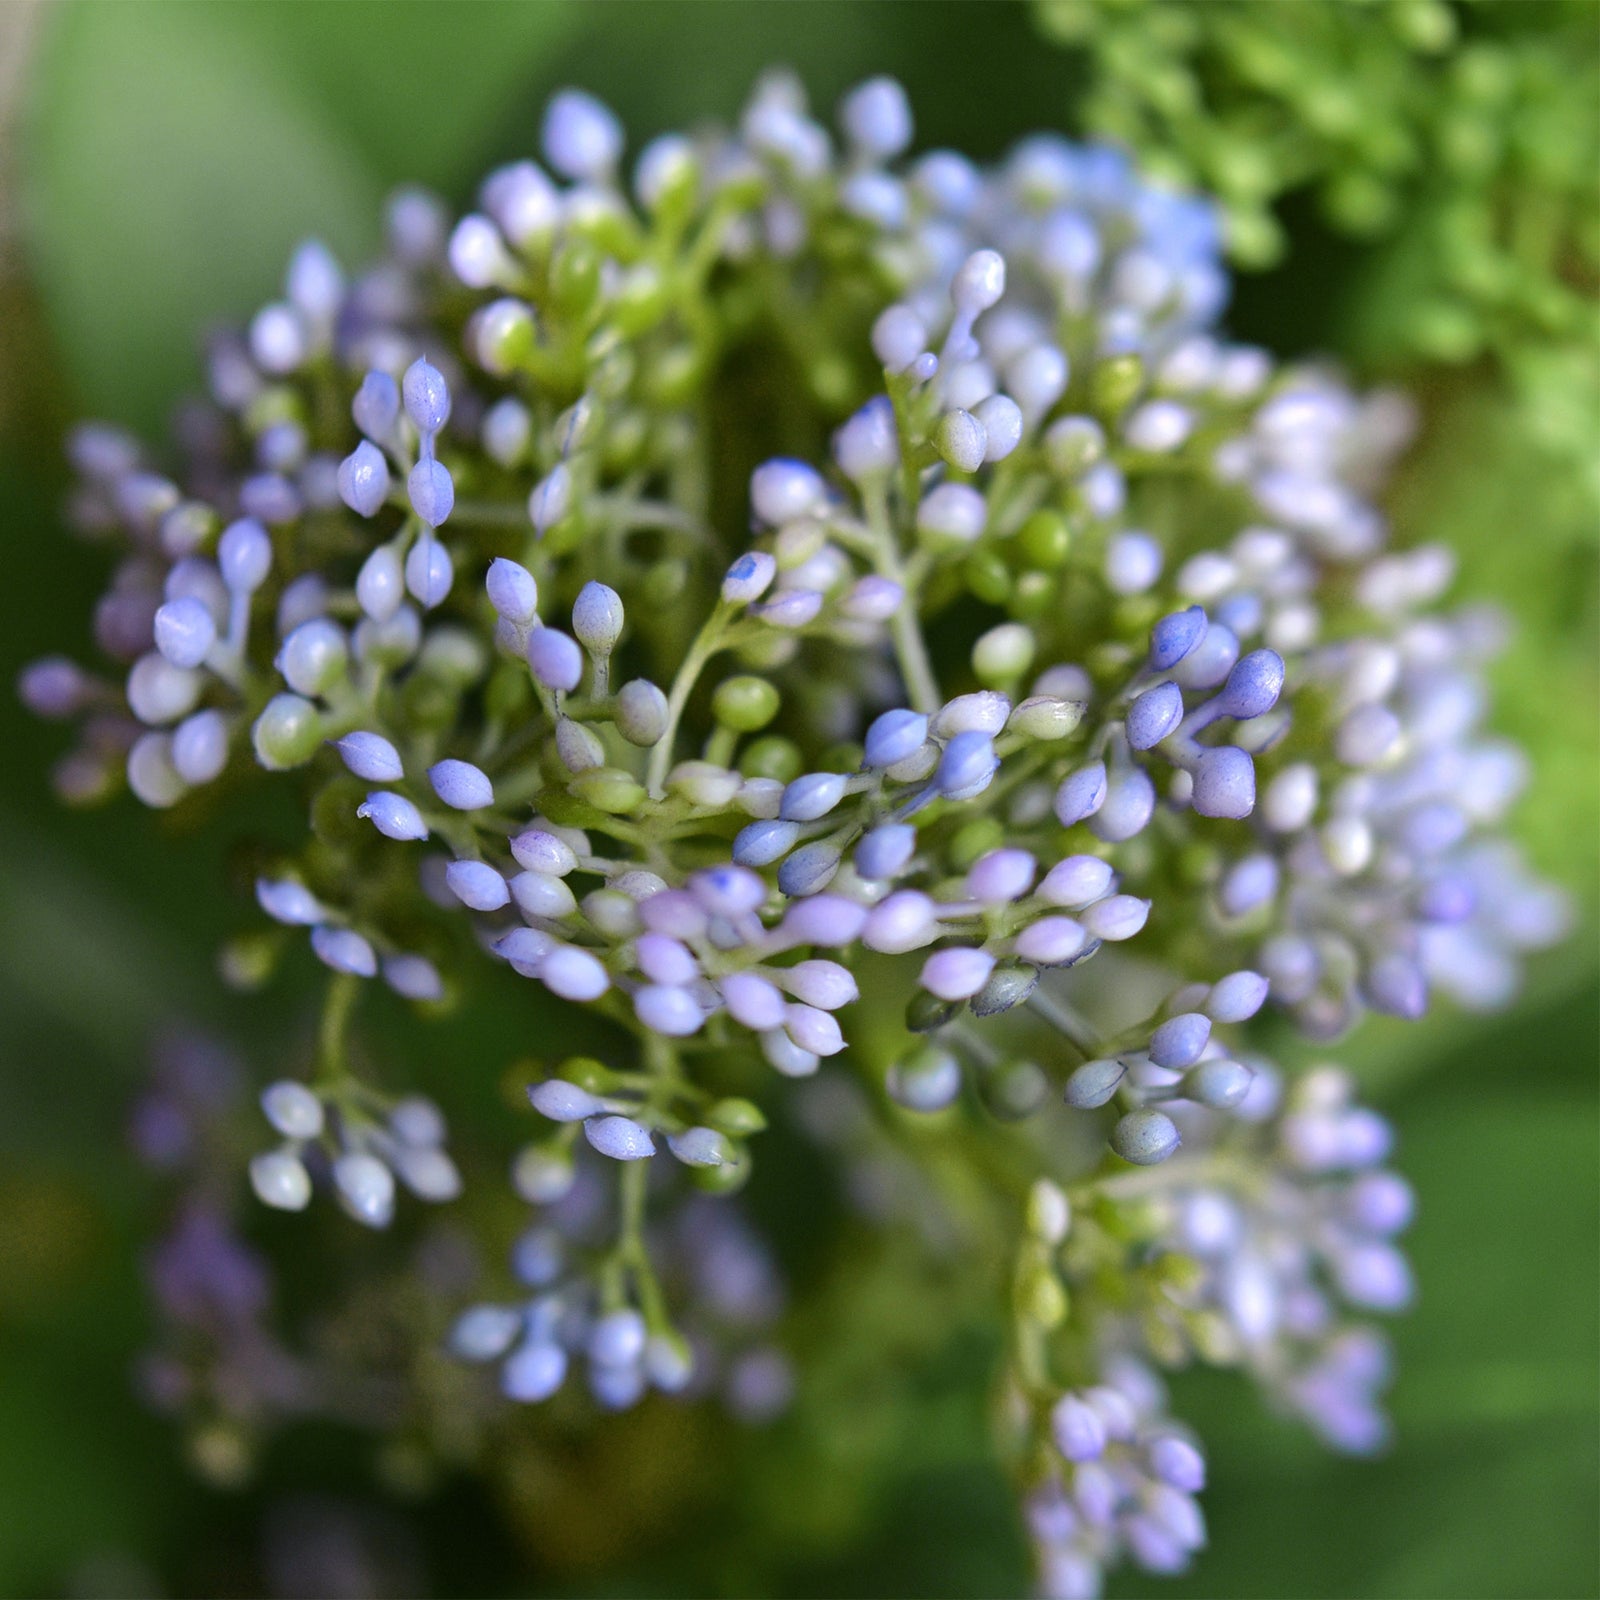 Viburnum (Serene Violet) Long Stem Artificial Silk Flowers, Filler Flower, Wedding, Home Decor, Arrangment 6 Stems